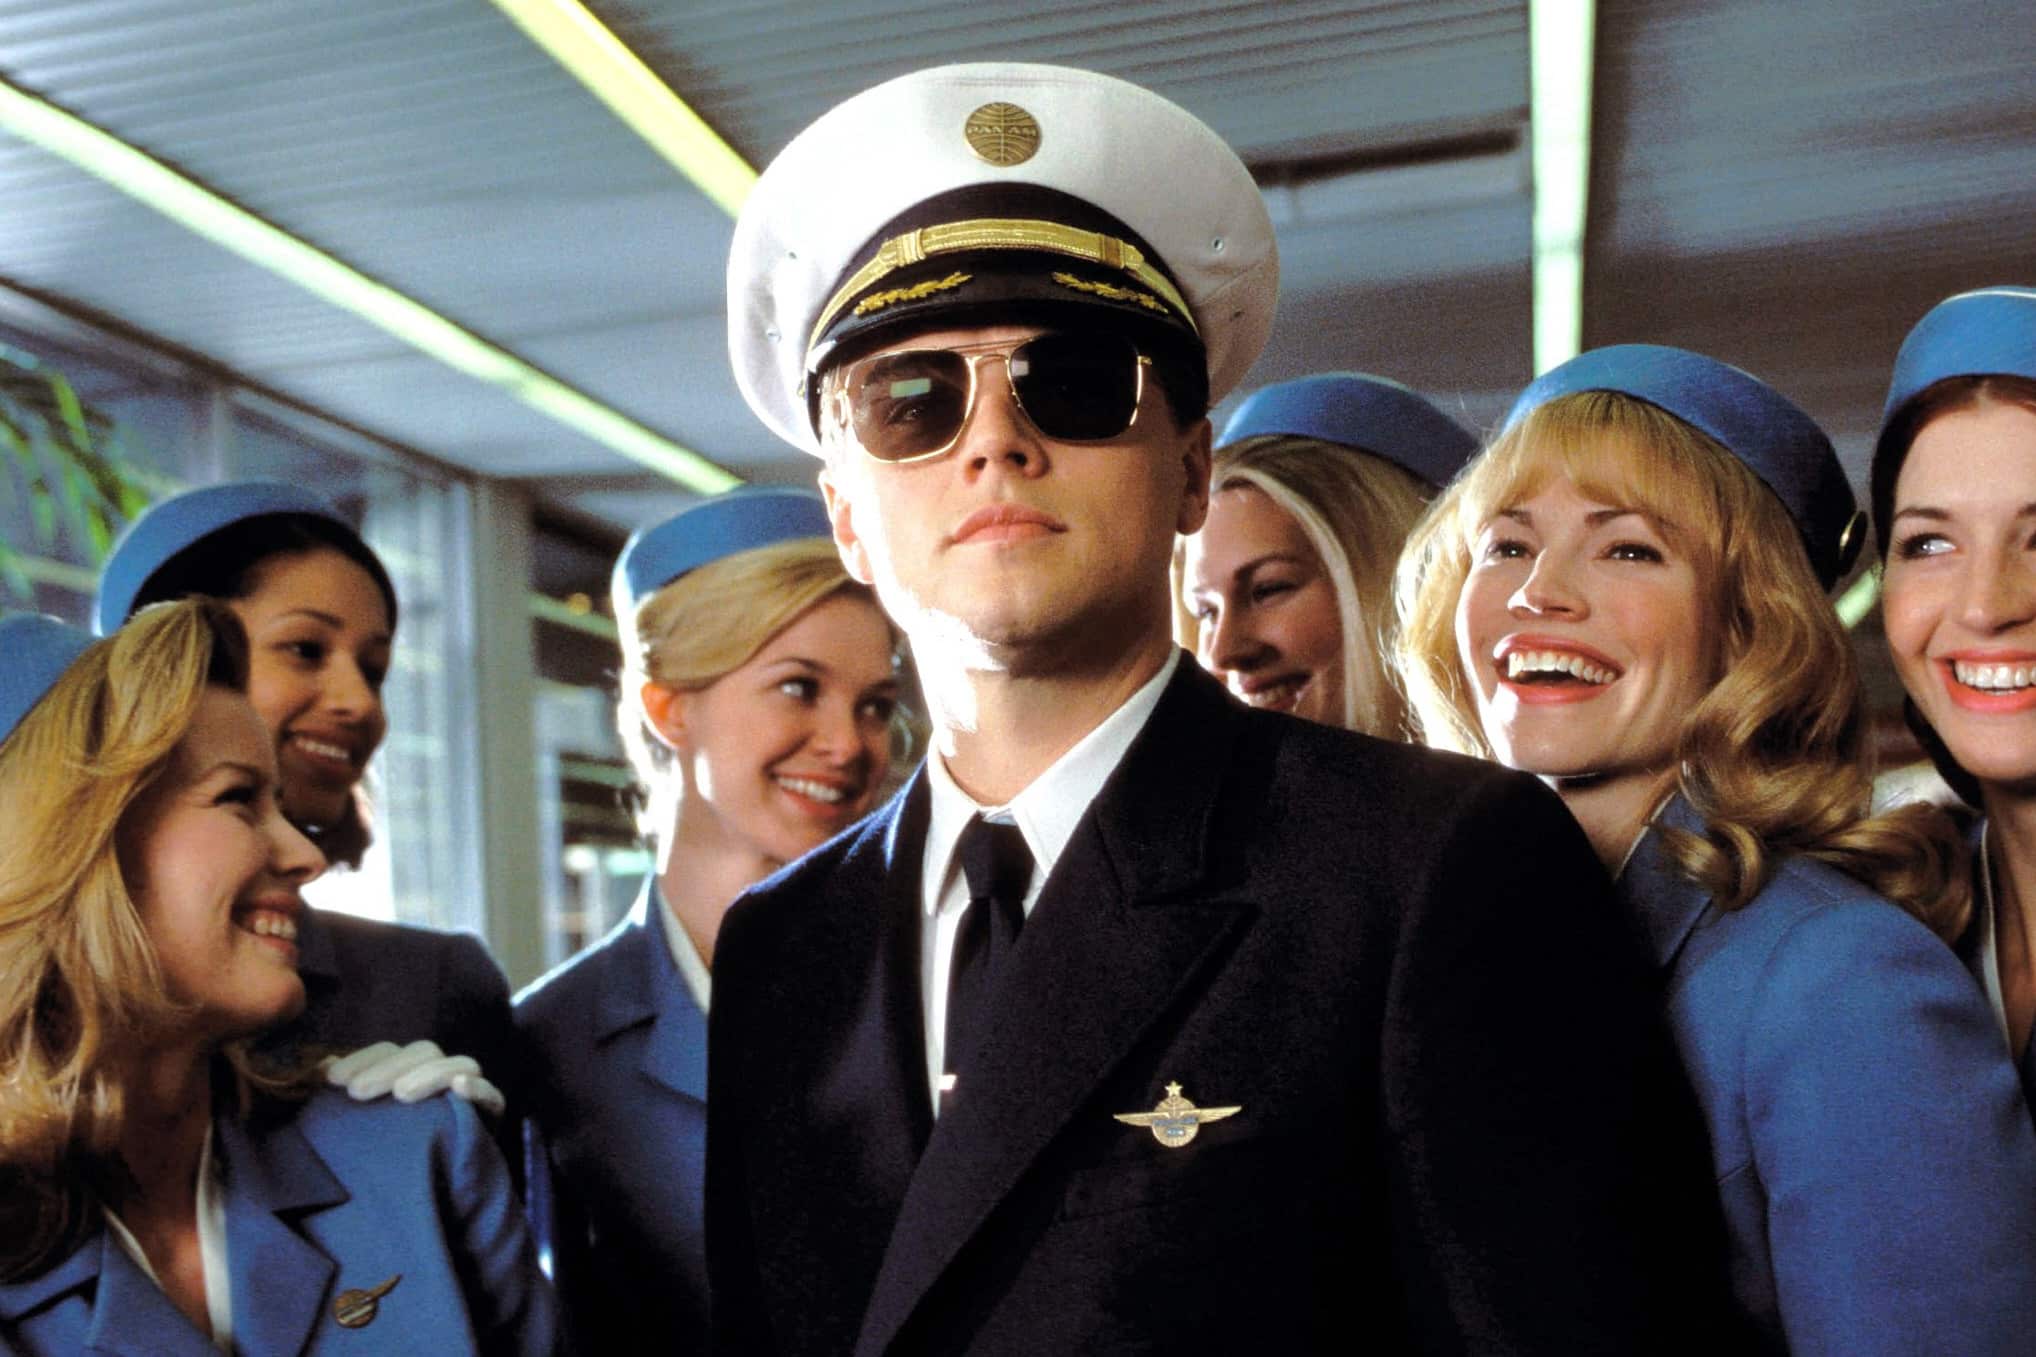 “I had to be the aggressor”: Amy Adams Talks About Ki*s Scene With Leonardo DiCaprio in Iconic $352M Movie